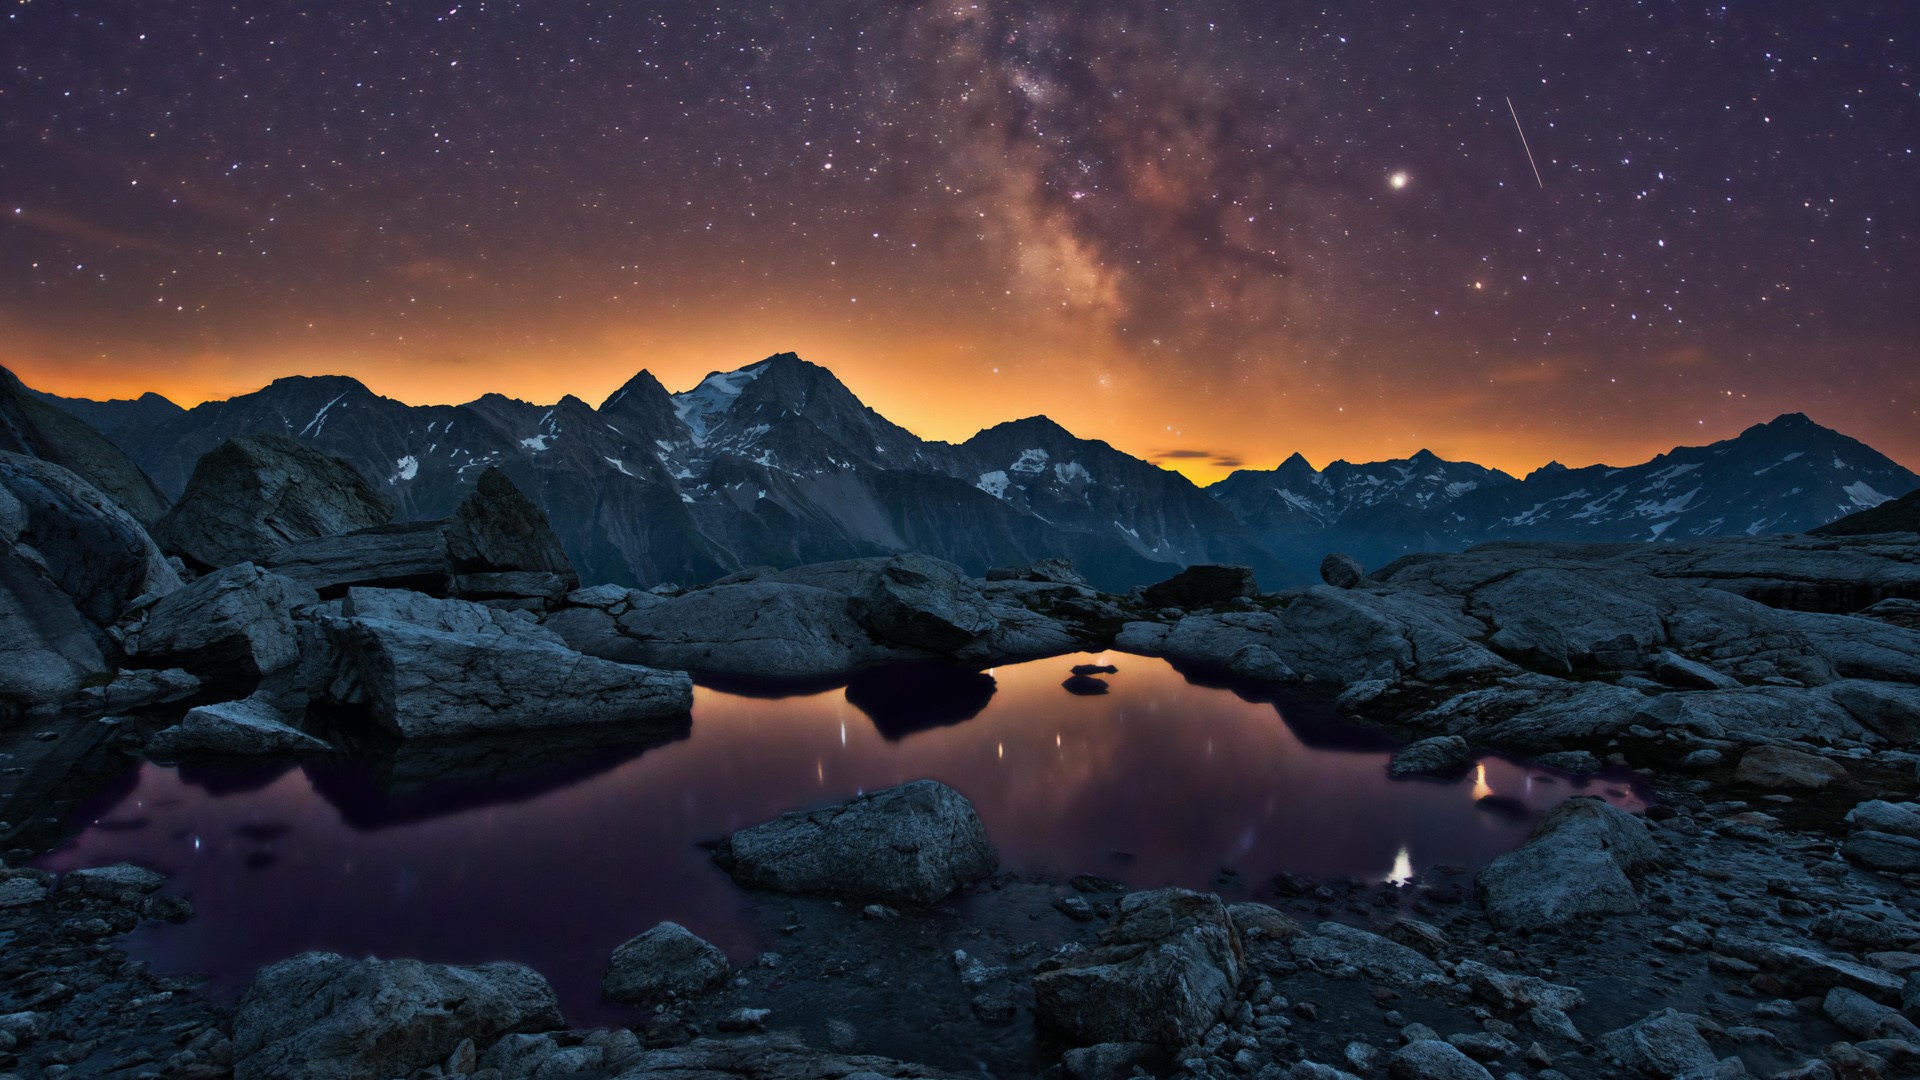 Starry sky with Milky Way over Uri mountains, Maderanertal, Switzerland ...